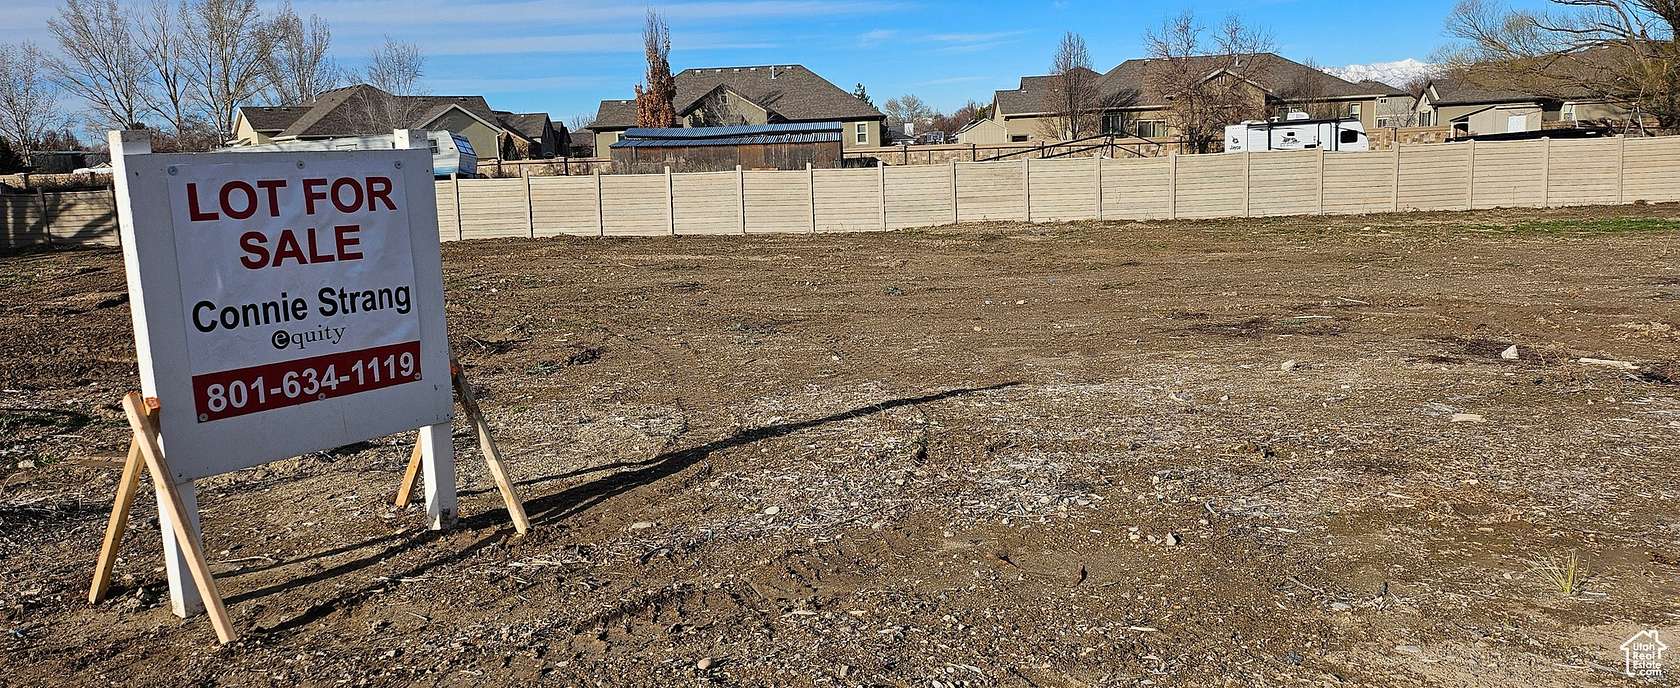 0.27 Acres of Residential Land for Sale in South Jordan, Utah